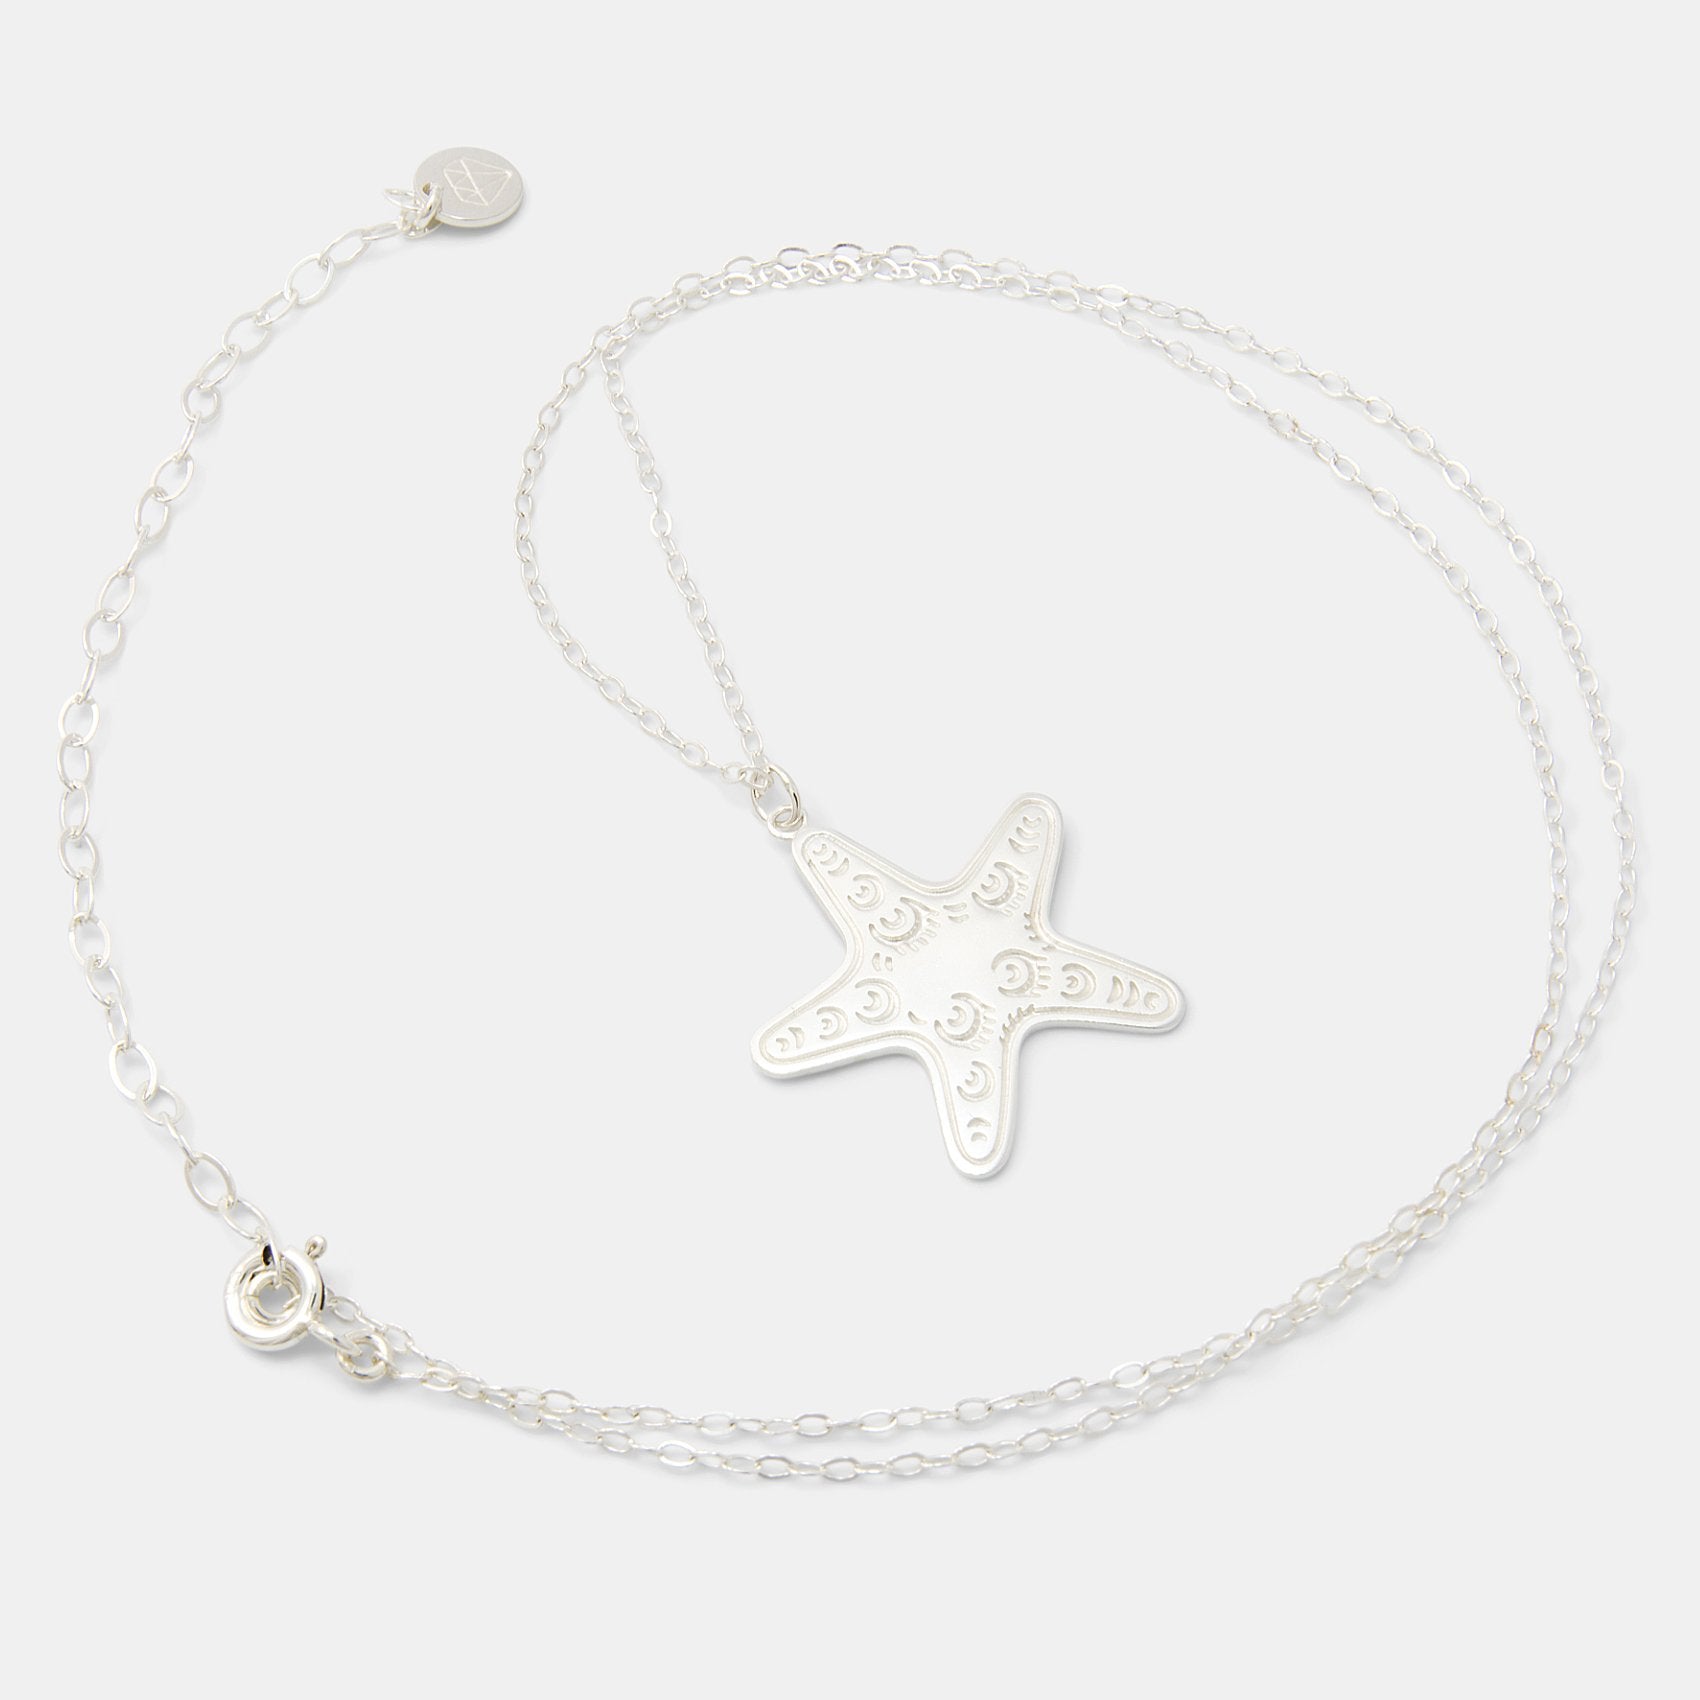 Starfish silver pendant necklace - Simone Walsh Jewellery Australia